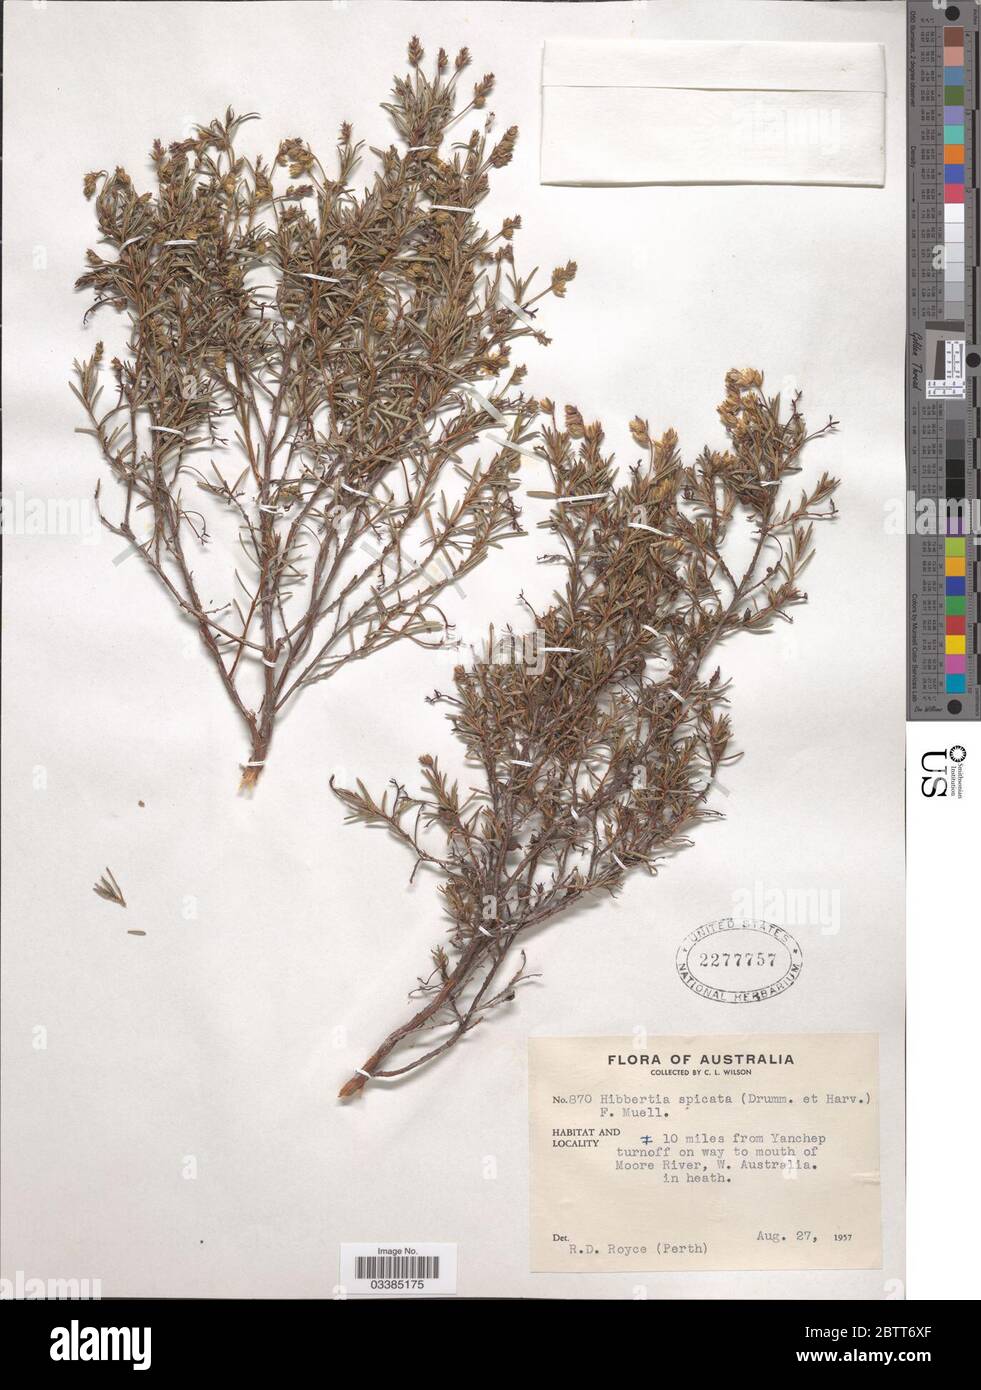 Hibbertia spicata F Muell. Stock Photo